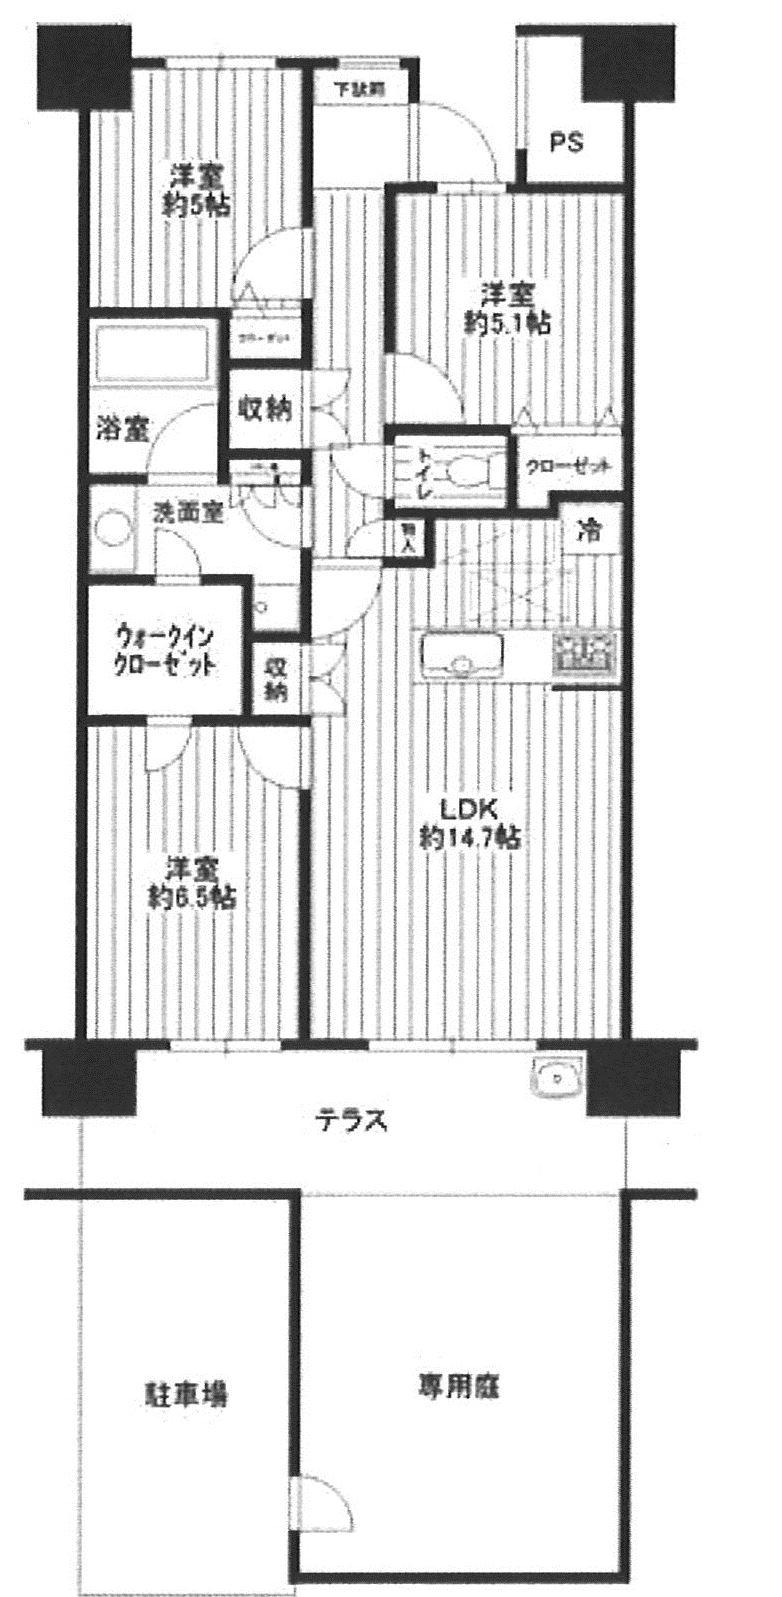 Floor plan. 3LDK, Price 15.8 million yen, Occupied area 73.74 sq m